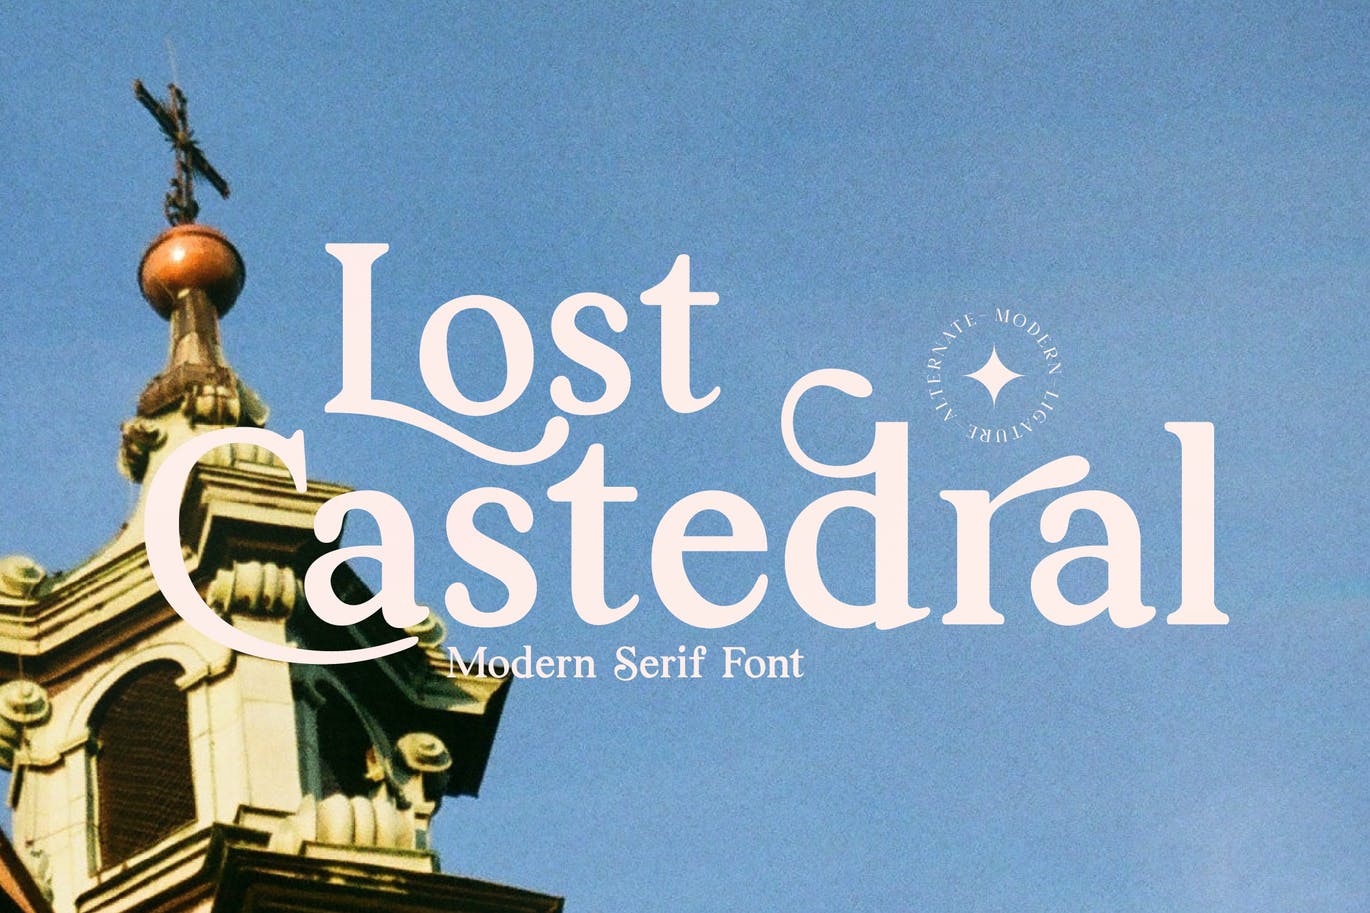 现代衬线字体素材 Lost Castedral Serif Font 设计素材 第2张